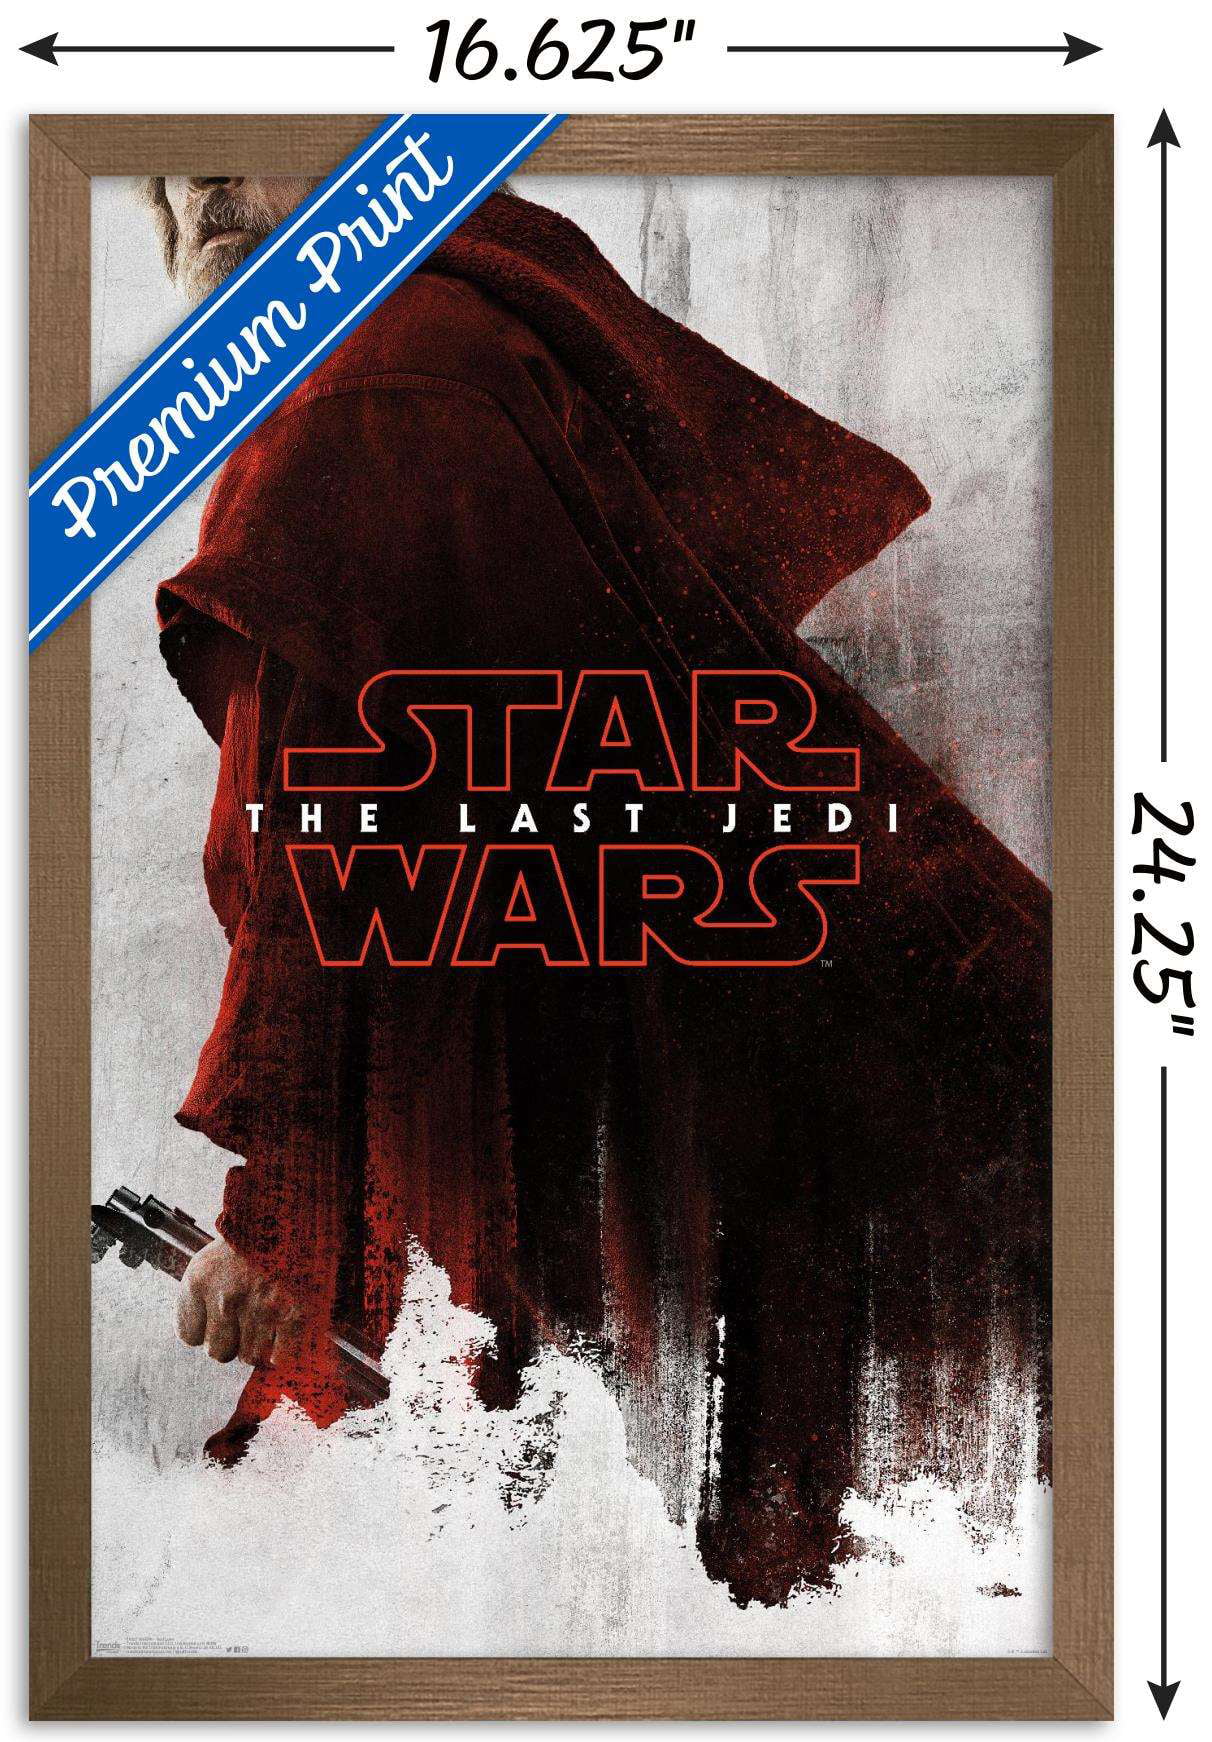 йЂ±й–“еЈІг‚Њз­‹ - Jedi Last The Wars: Star Red Pins Push with Poster Wall Finn гЃќгЃ®д»– -  www.goldenshoppingcalhau.com.br